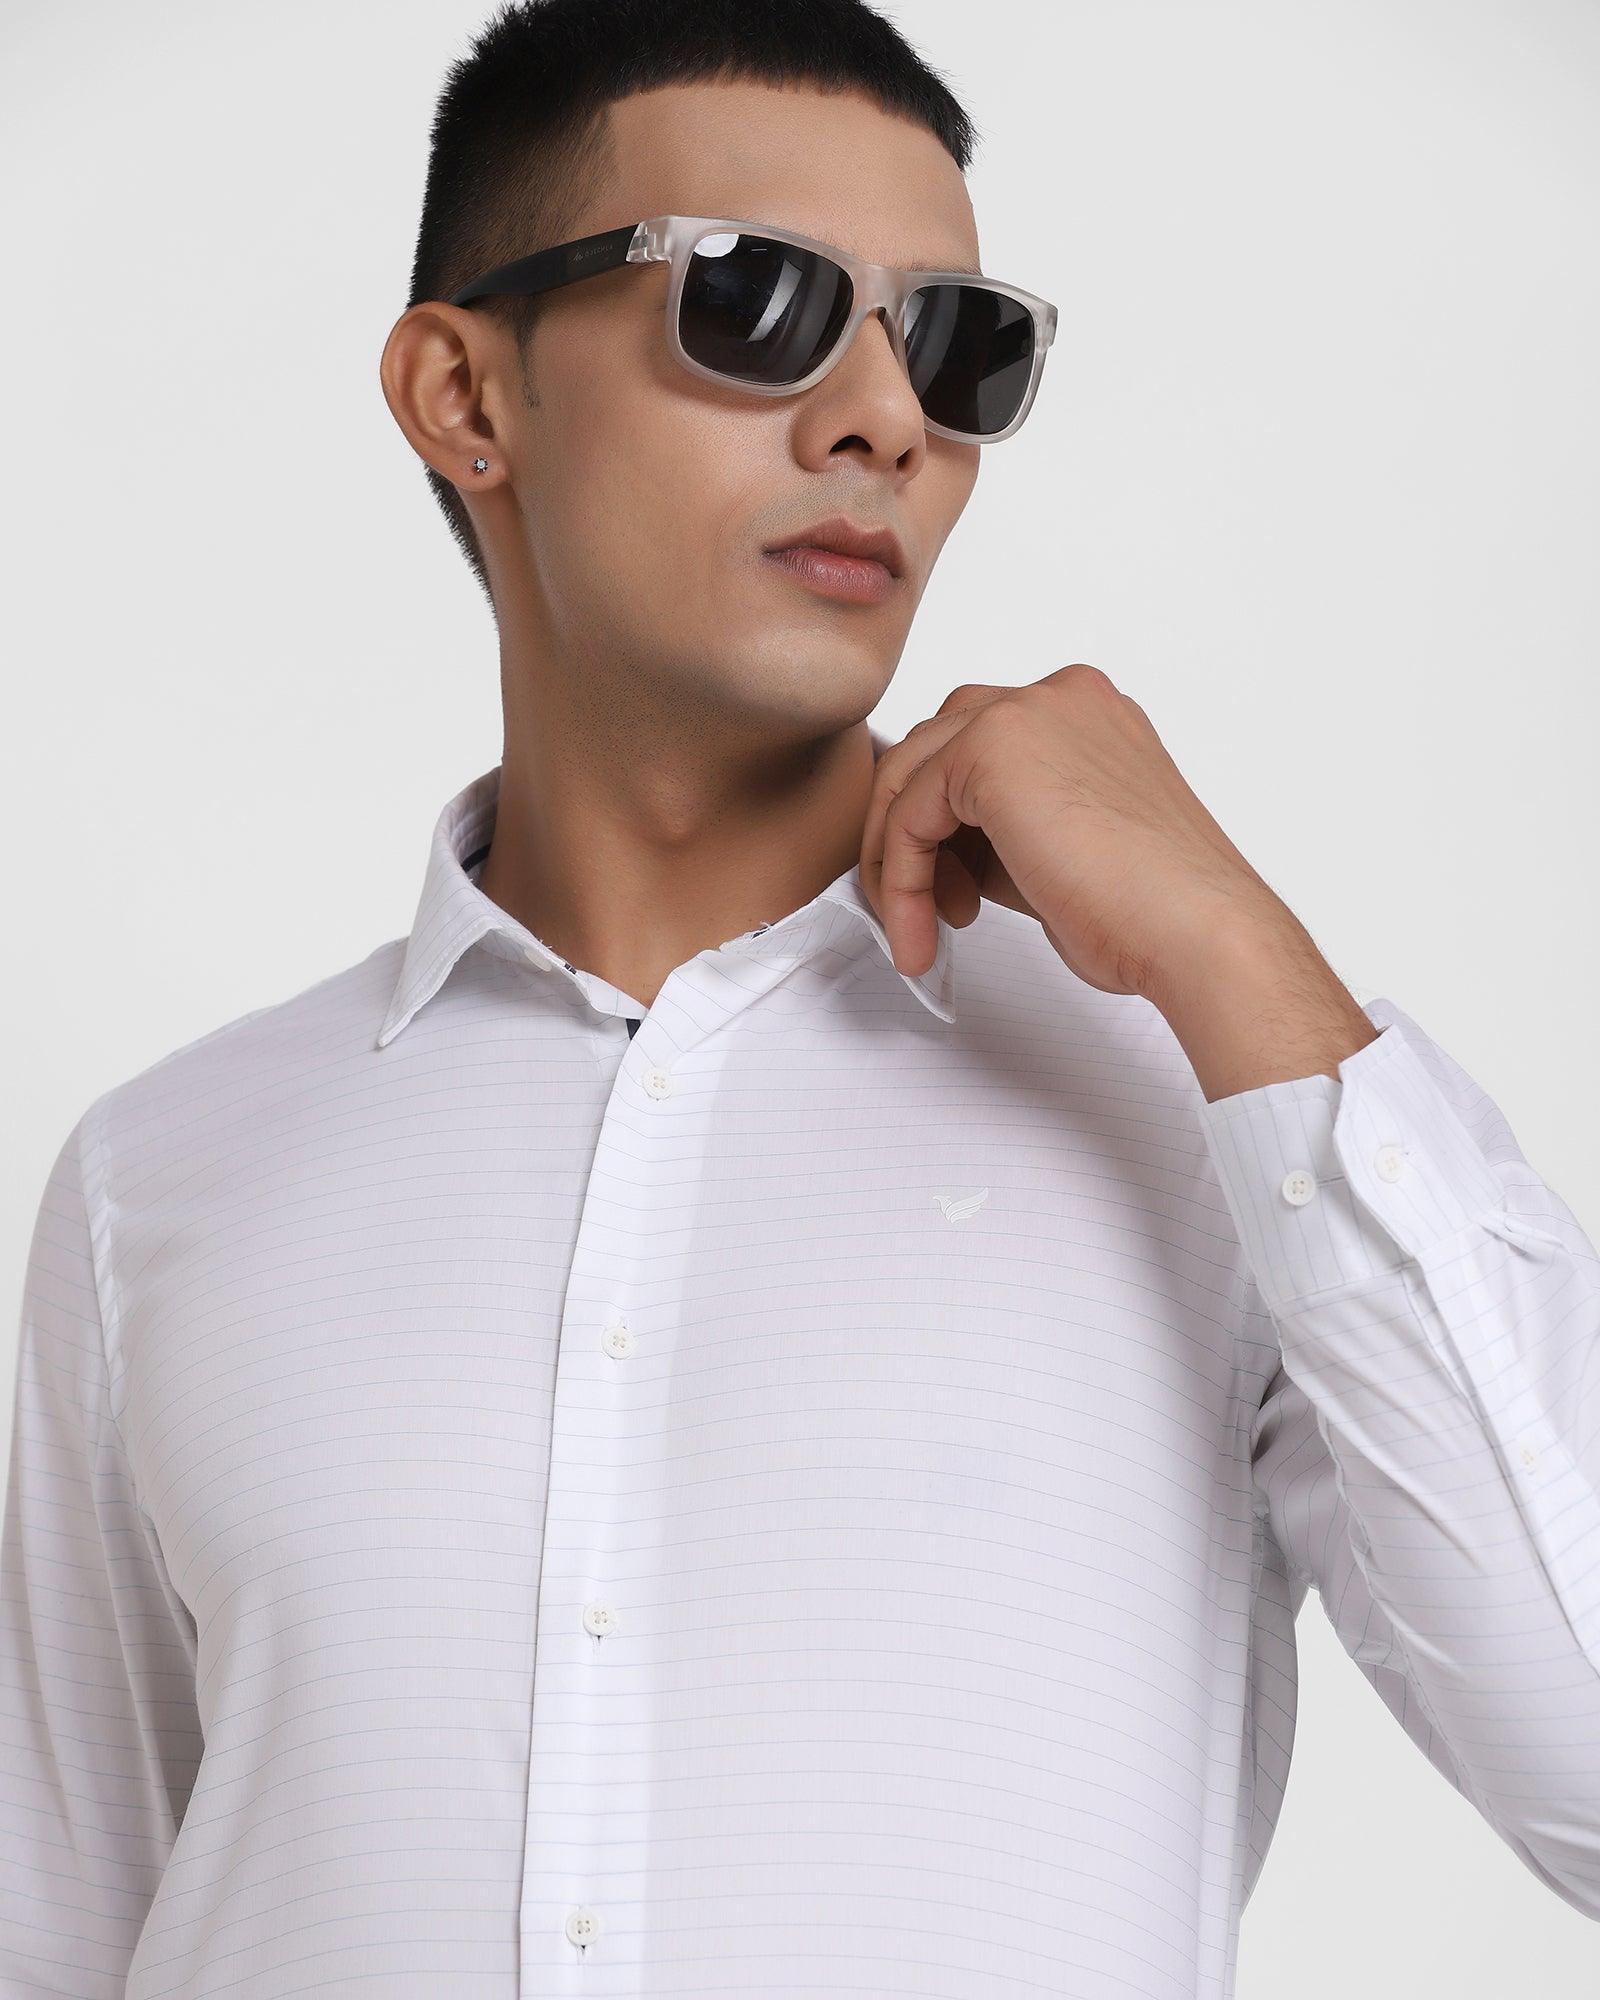 TechPro Formal White Striped Shirt - Colson